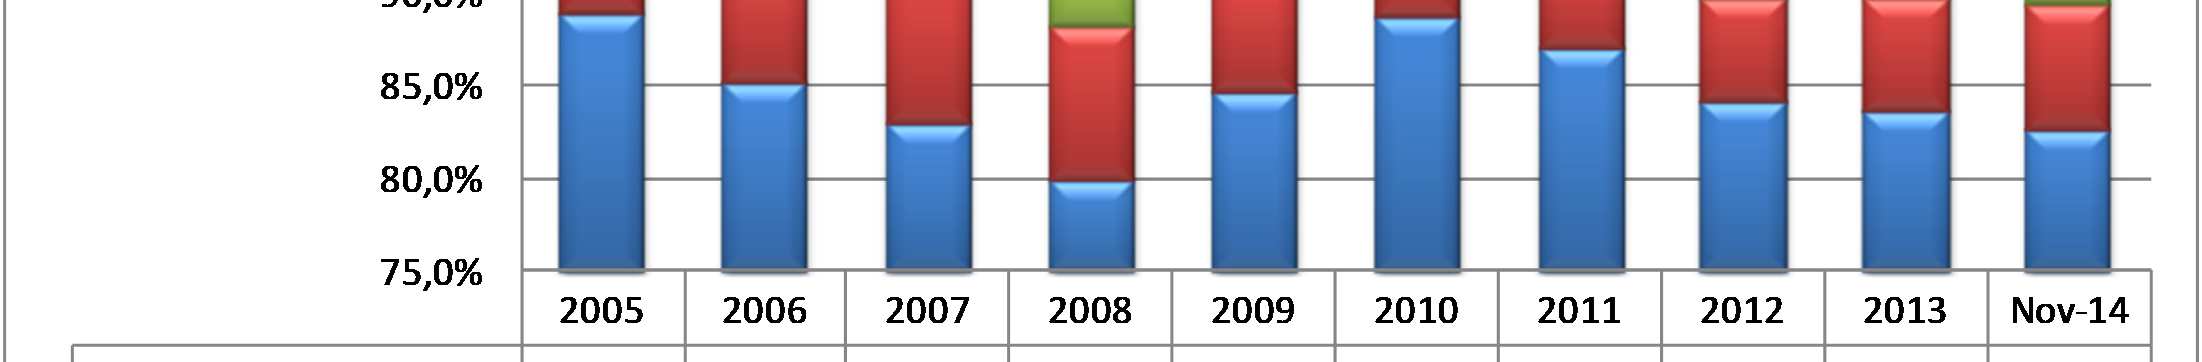 MORA MYPE Sobre Stock Garantizado (Monto %) Dic. 2005-2013 y Nov.